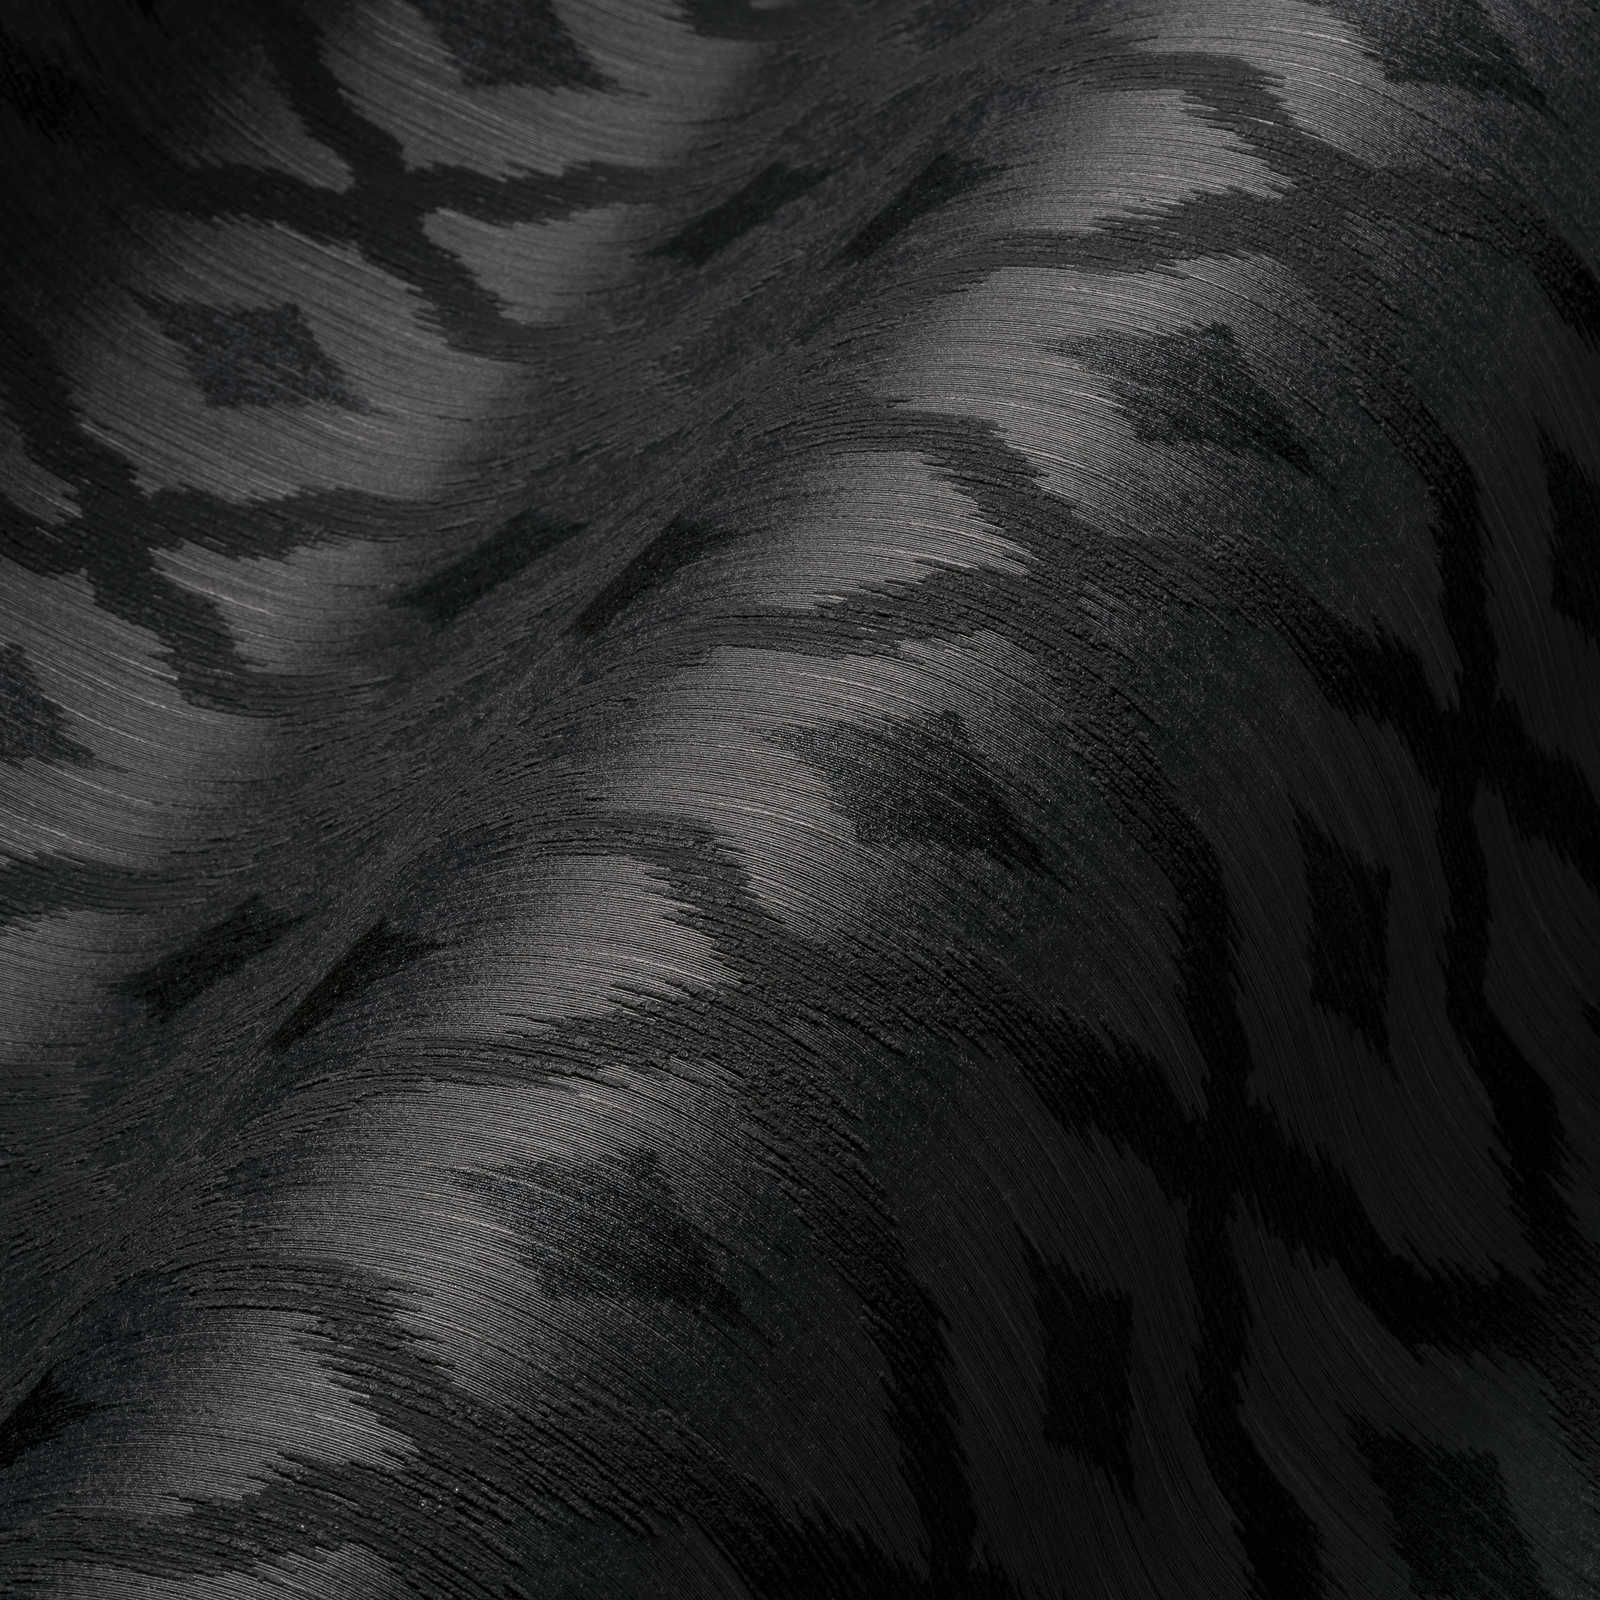             Mustertapete im Ikat Stil mit Textilstruktur – Braun
        